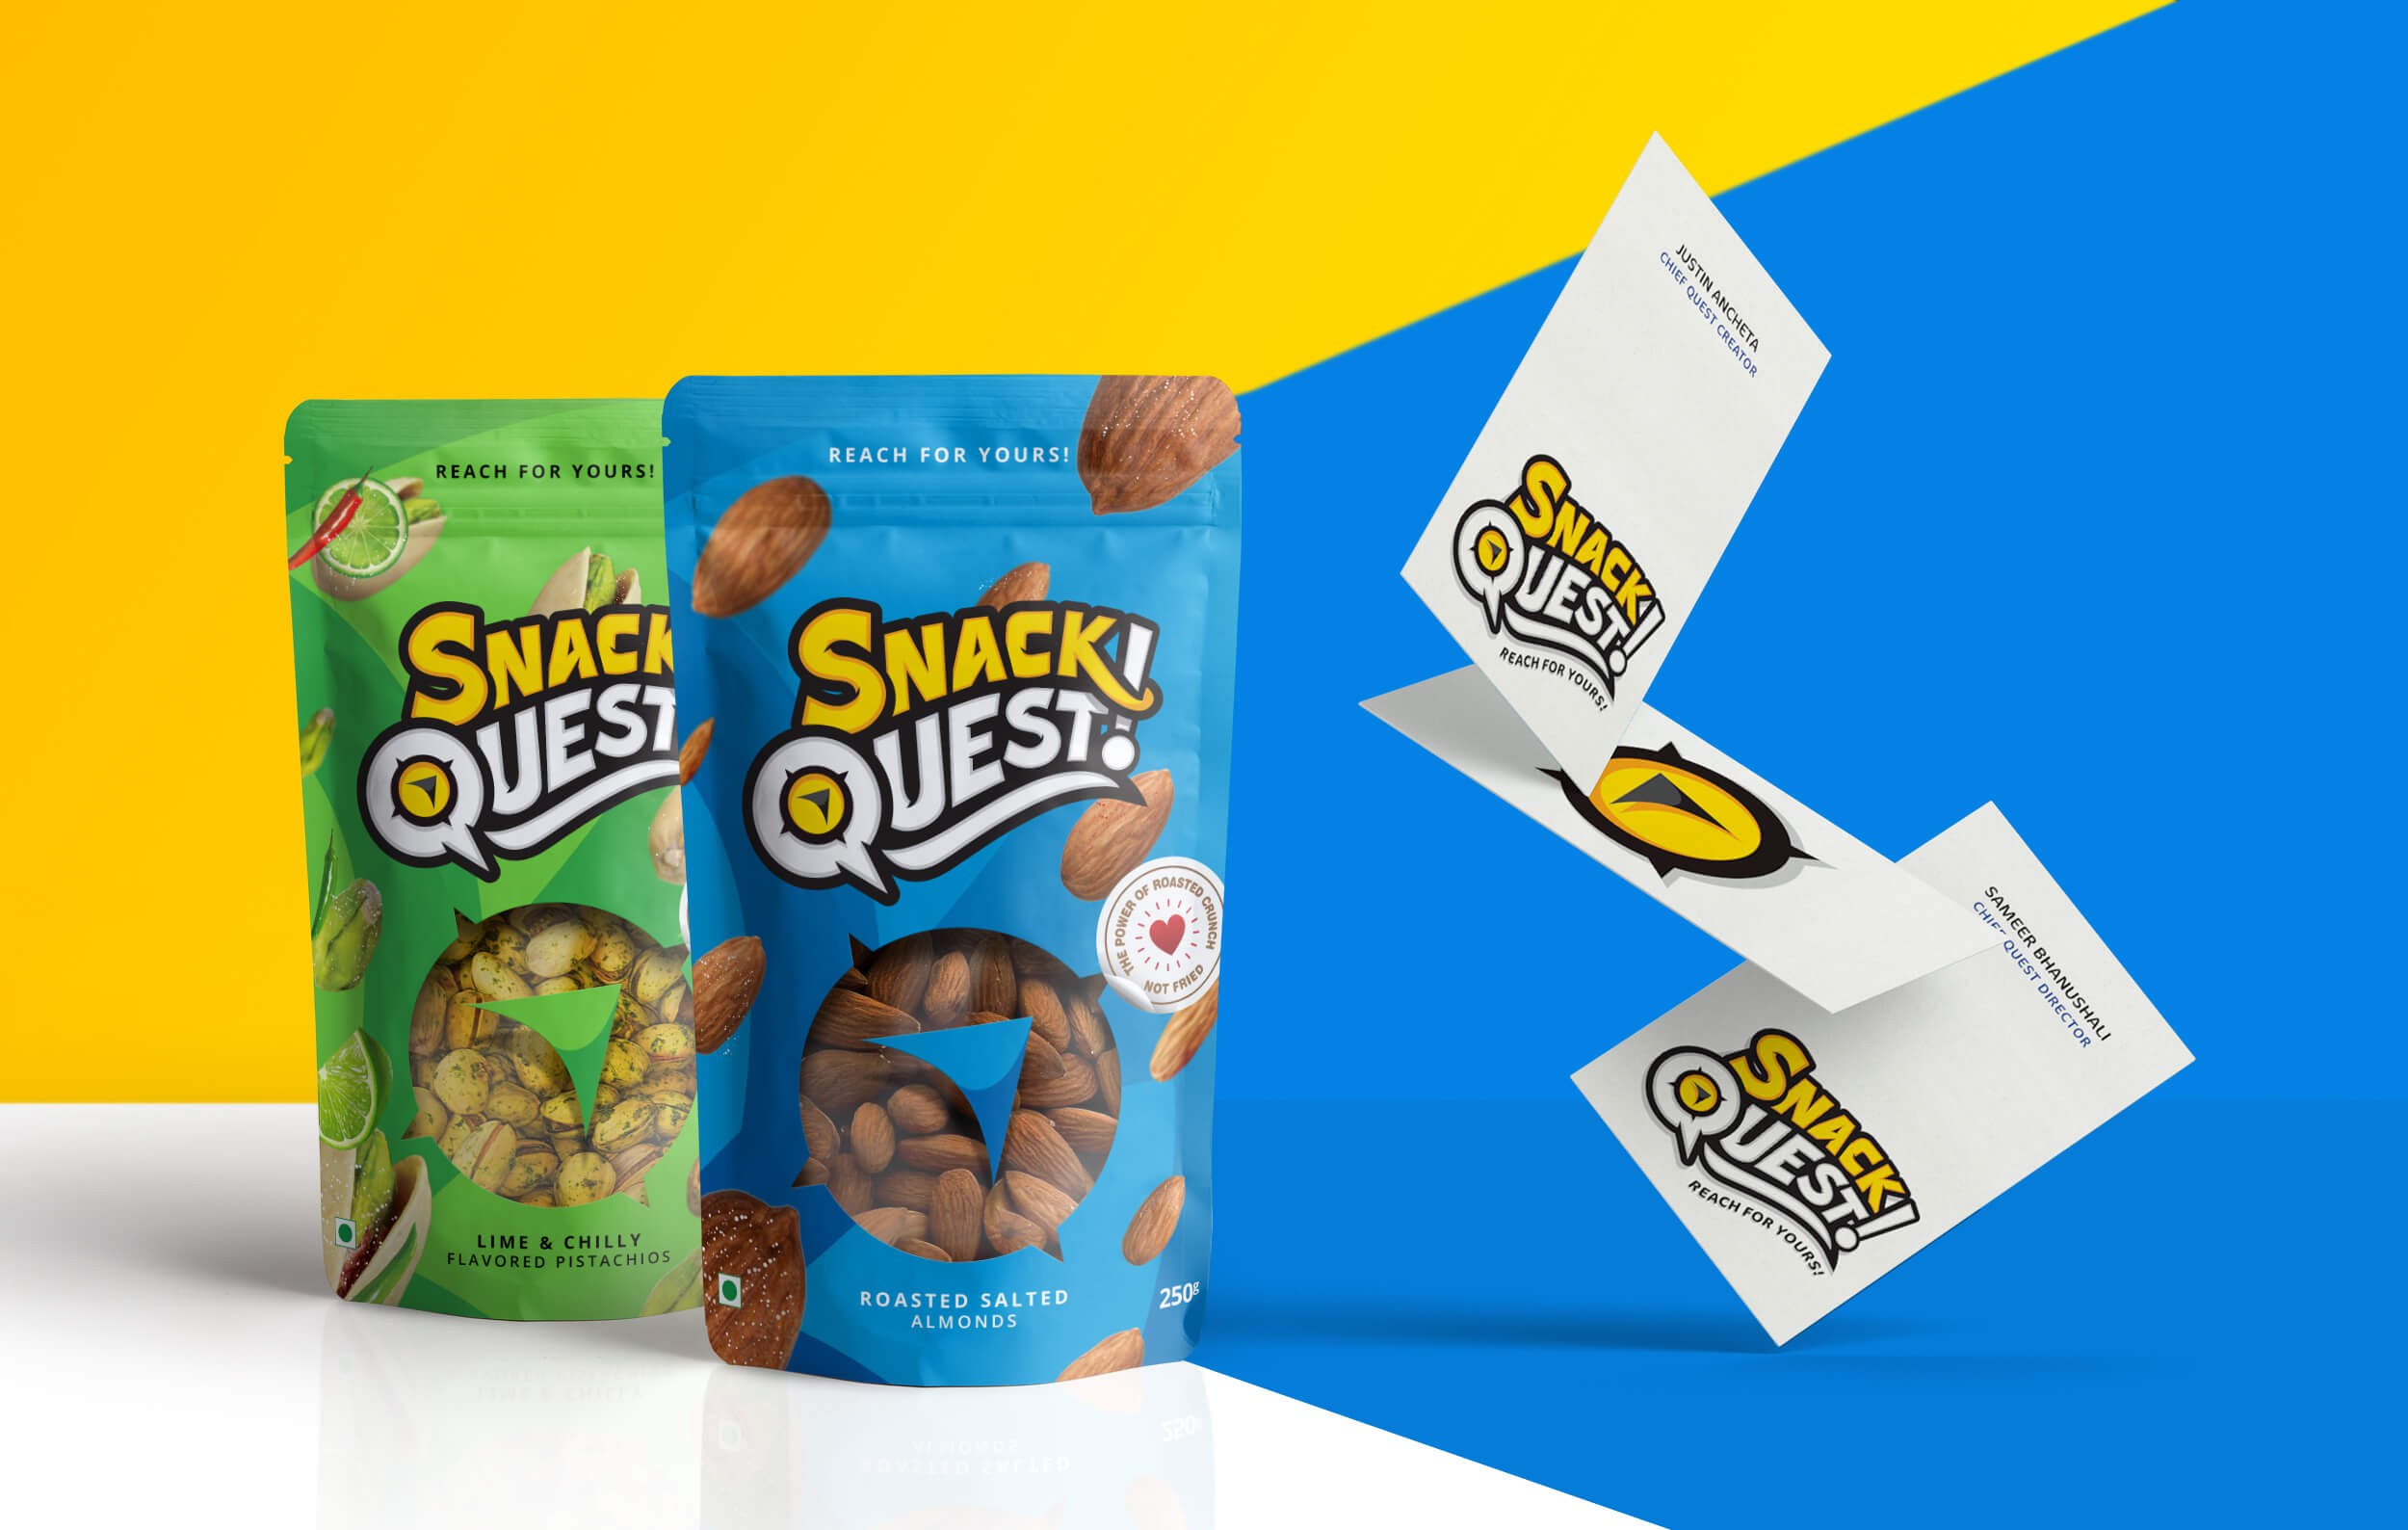 Snack-Quest-brand-identity-packaging-design-by-Artisticodopeo-Designz(6)_1.jpg Image